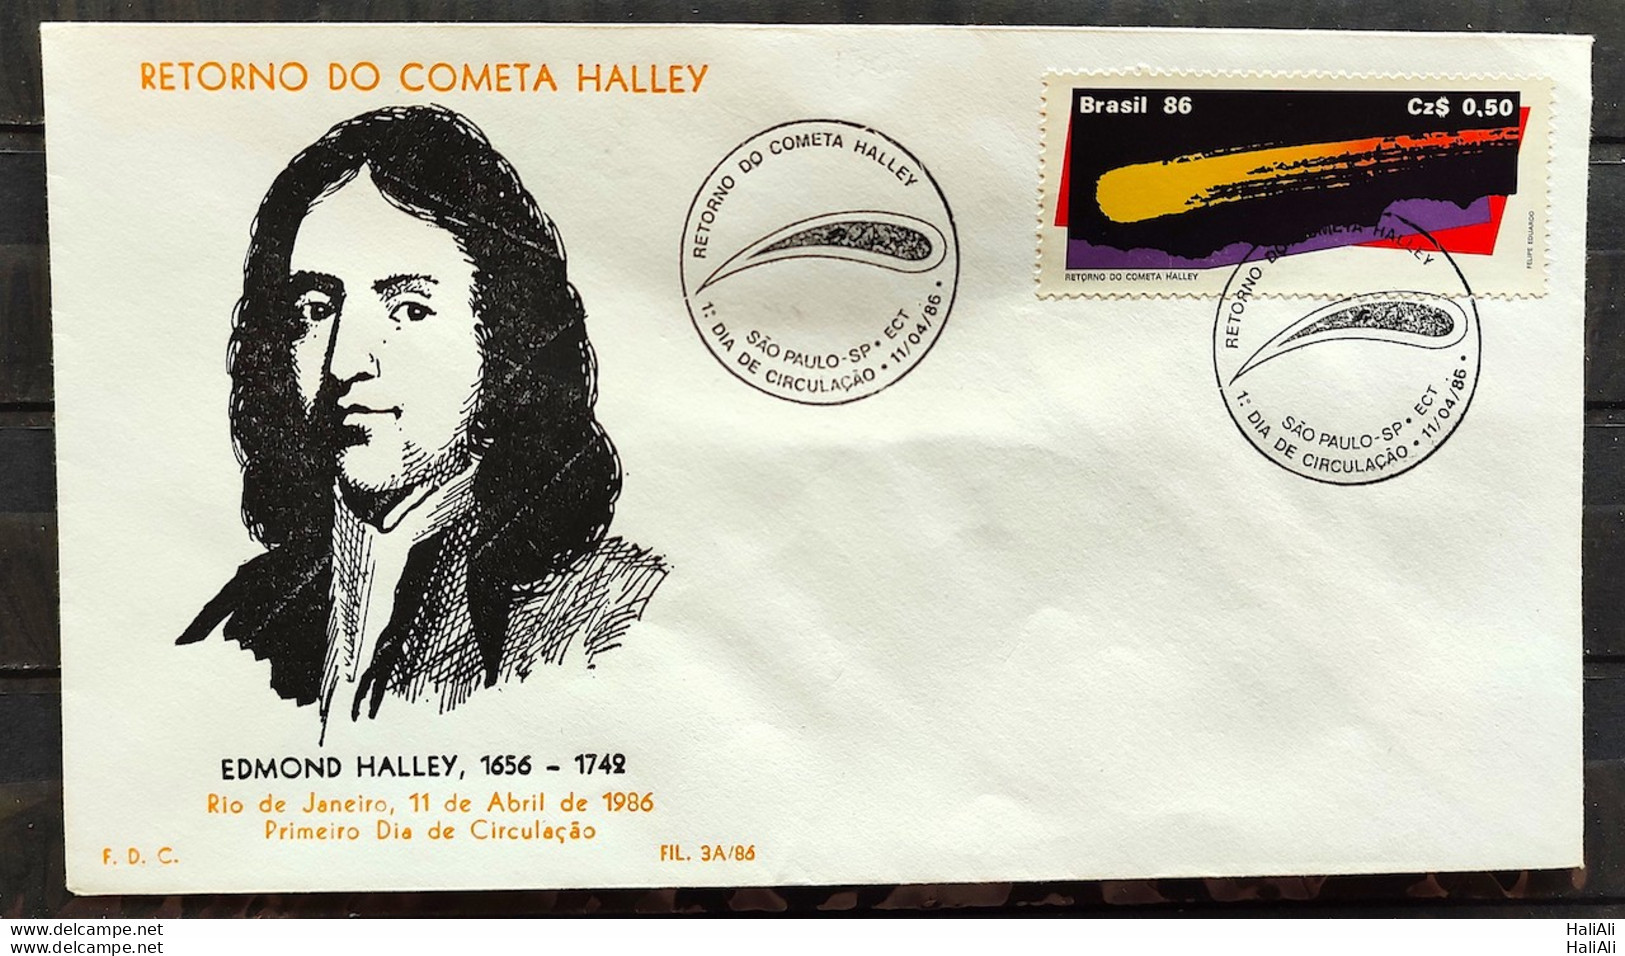 Brazil Envelope PVT FIL 01A 1986 Comet Halley Astronomy CBC SP - FDC